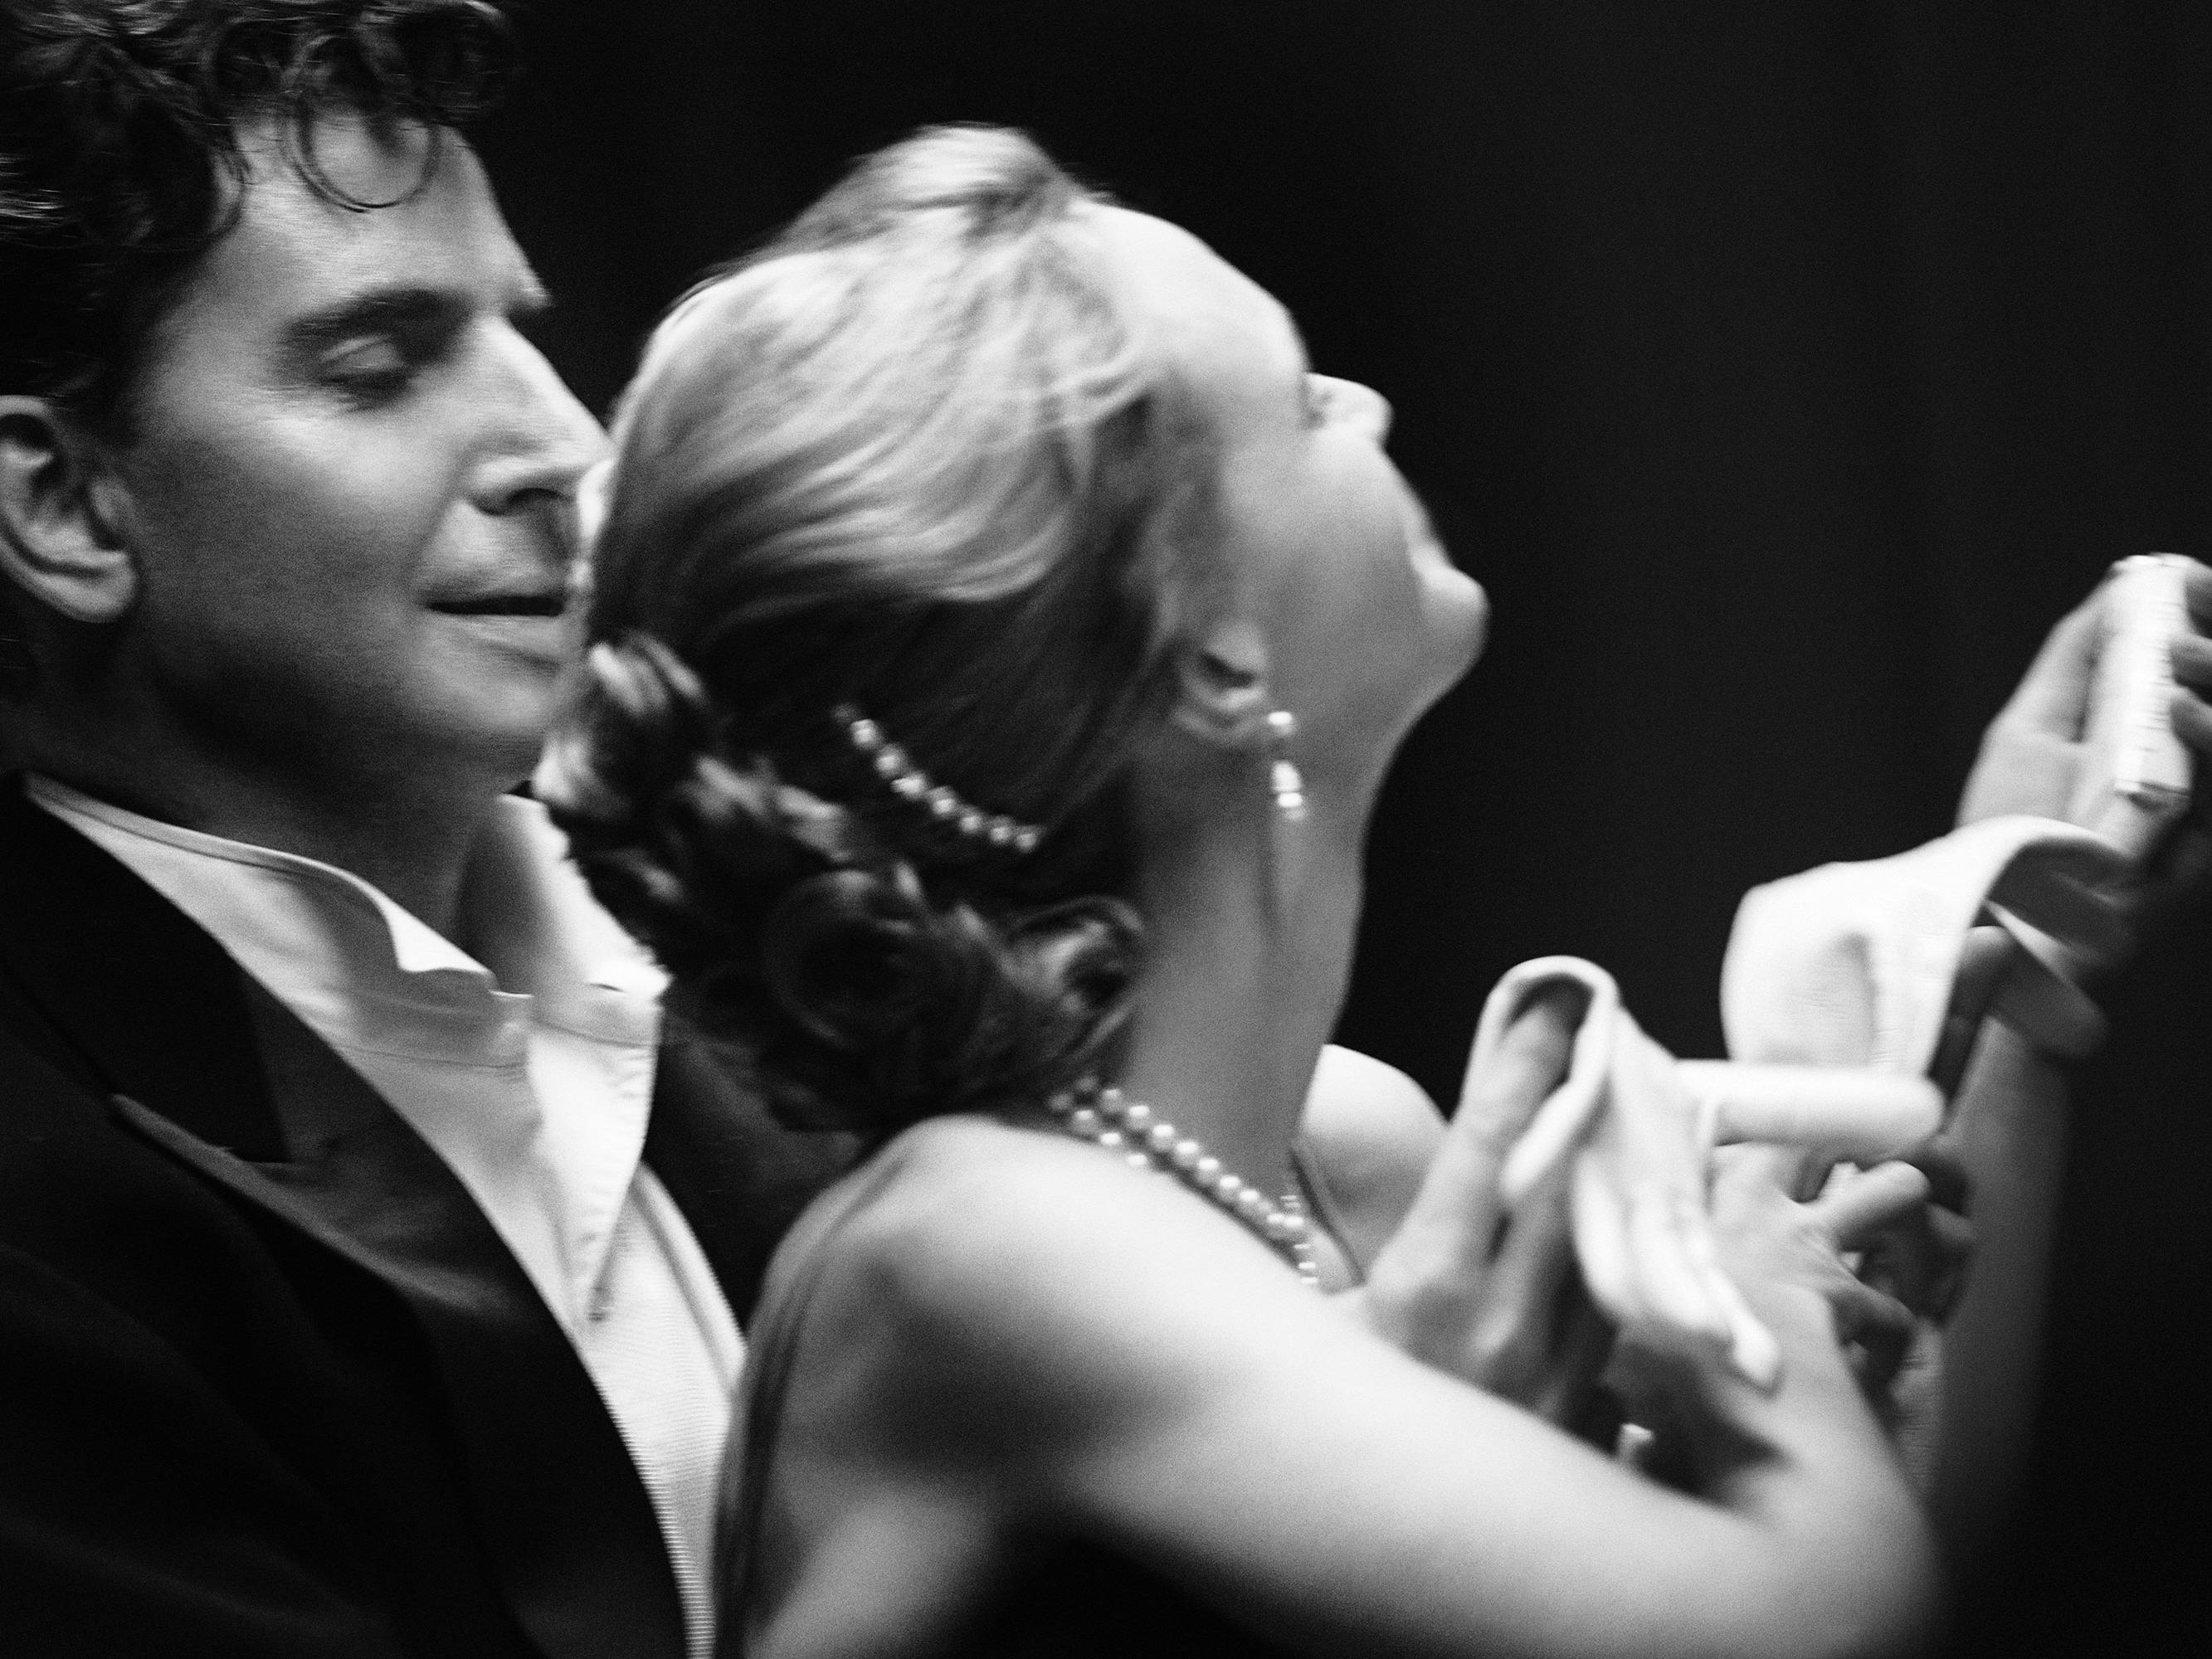 Leonard Bernstein (Bradley Cooper) and Felicia Montealegre Cohn Bernstein (Carey Mulligan) stand together in this elegant black-and-white picture.